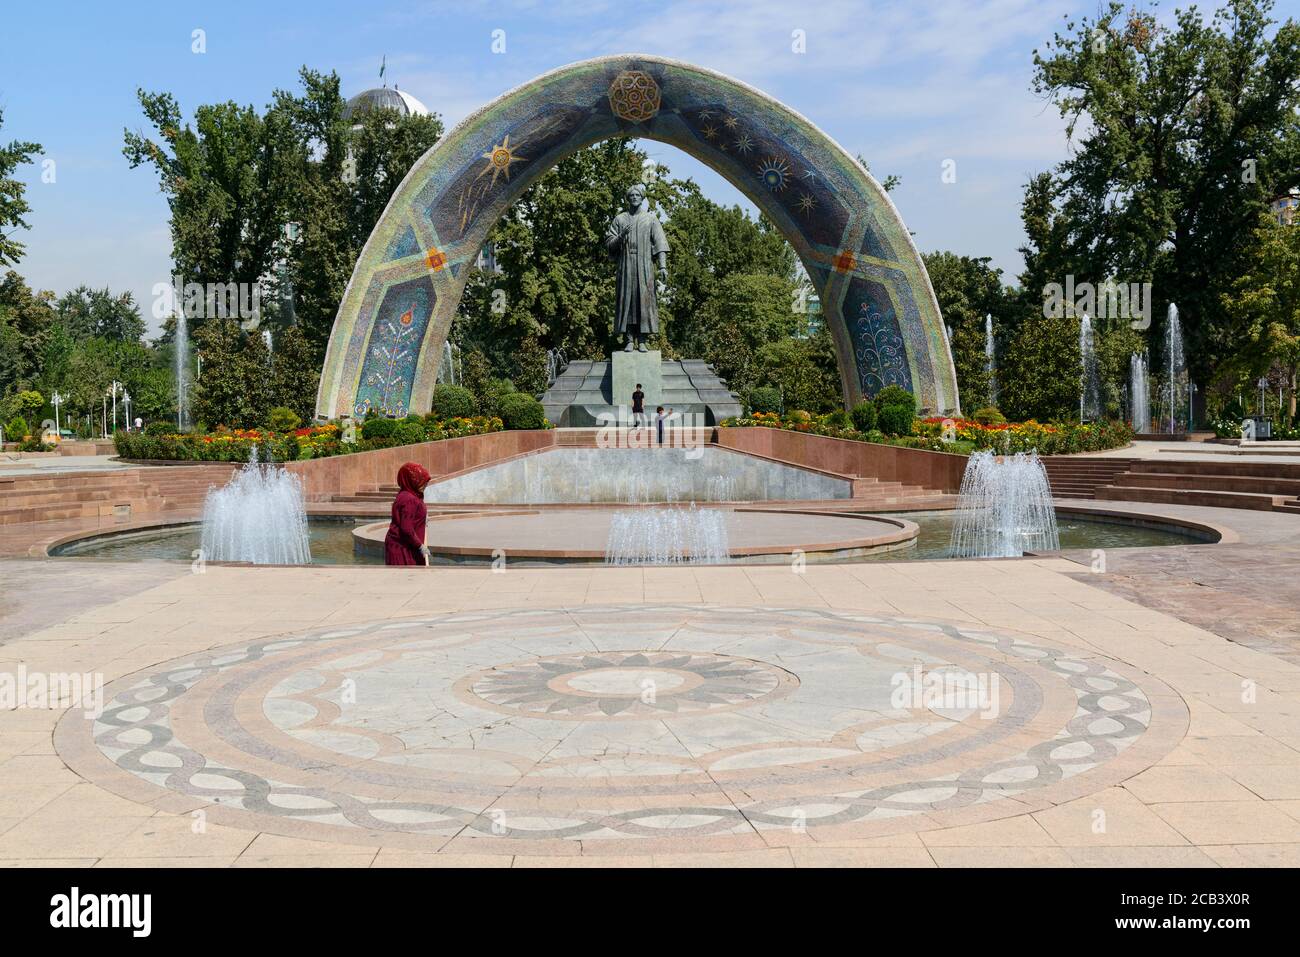 Statue of Persian poet Rudaki in Rudaki Park in Dushanbe, Tajikistan Stock Photo